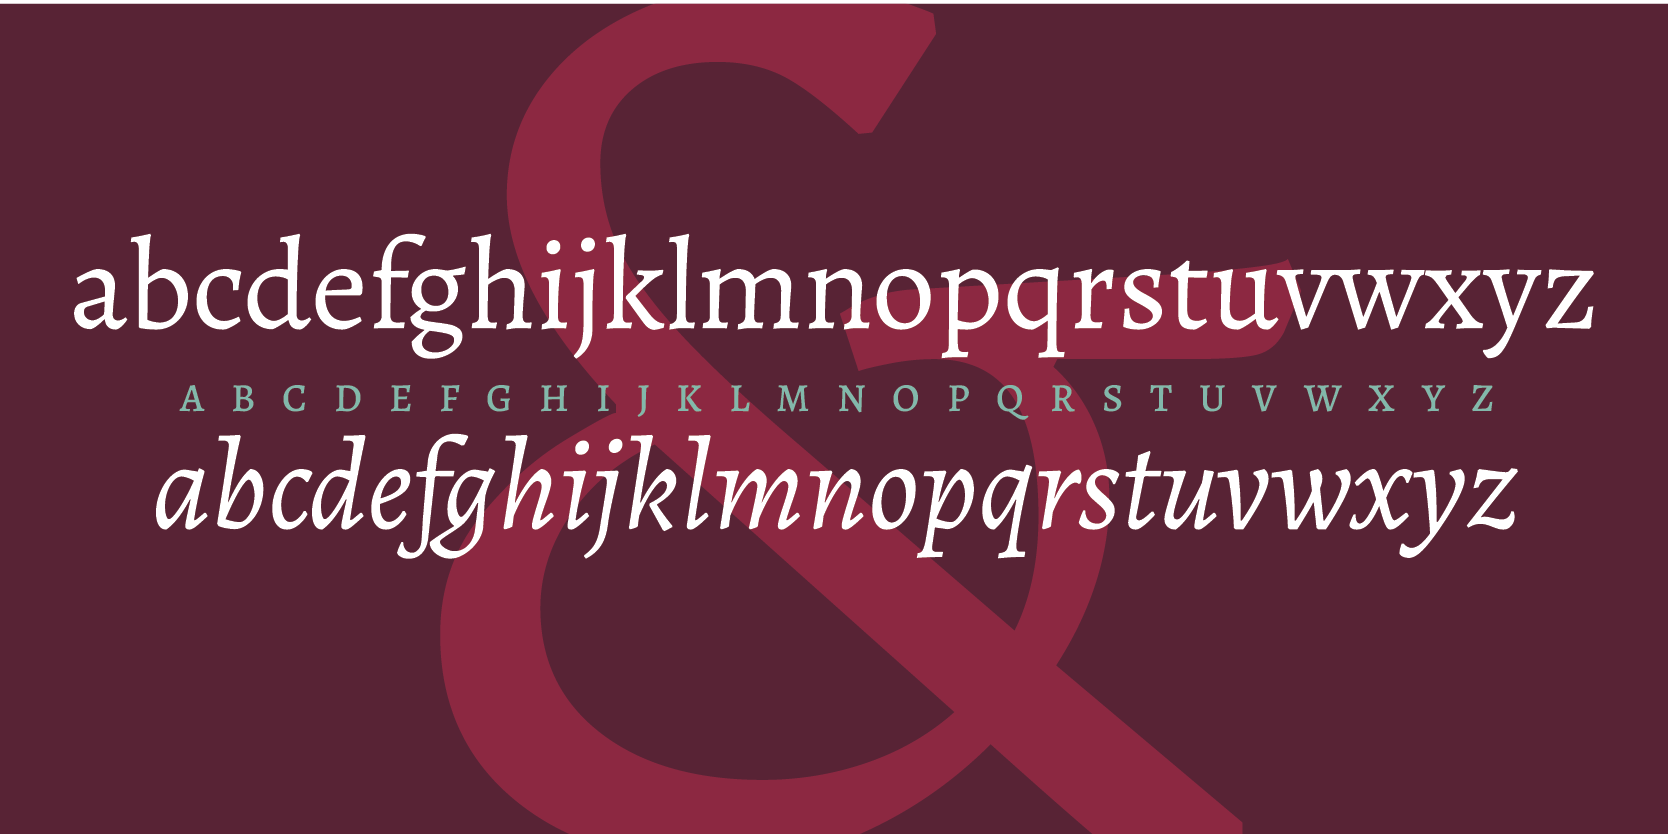 Card displaying Alegreya typeface in various styles